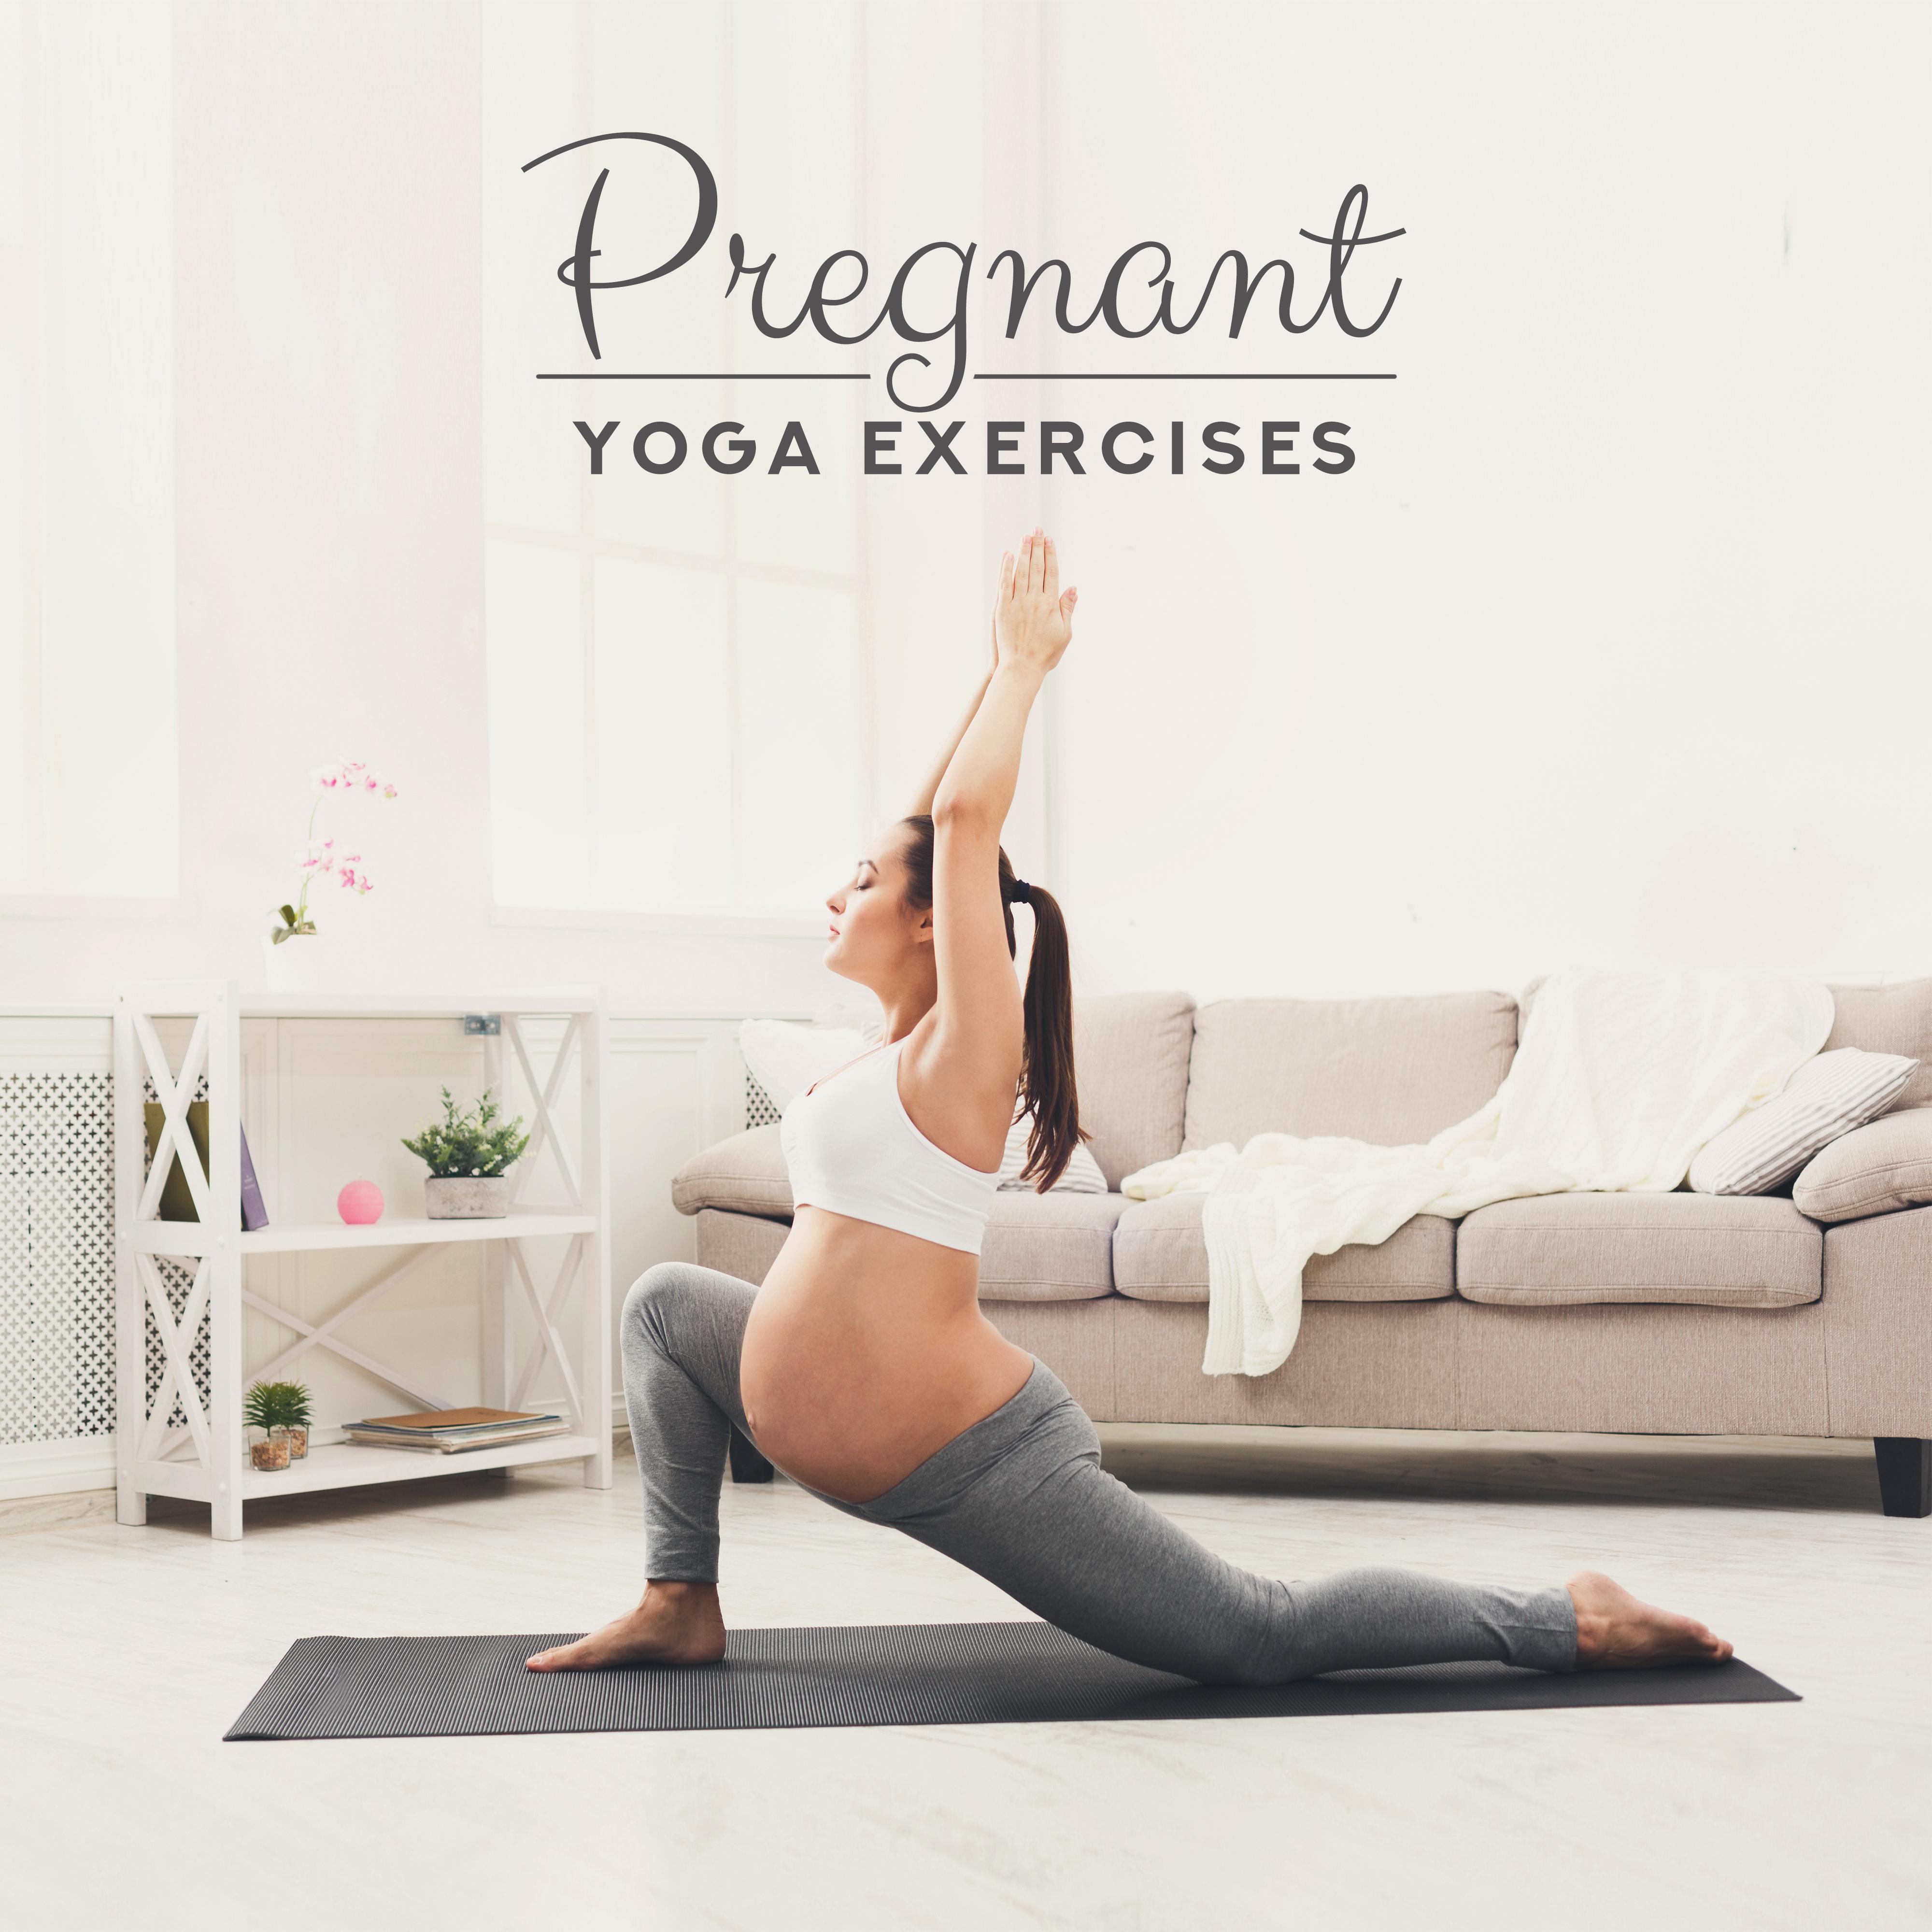 Pregnant Yoga Exercises - 15 Tracks for Yogic Poses and Asanas for Future Mums